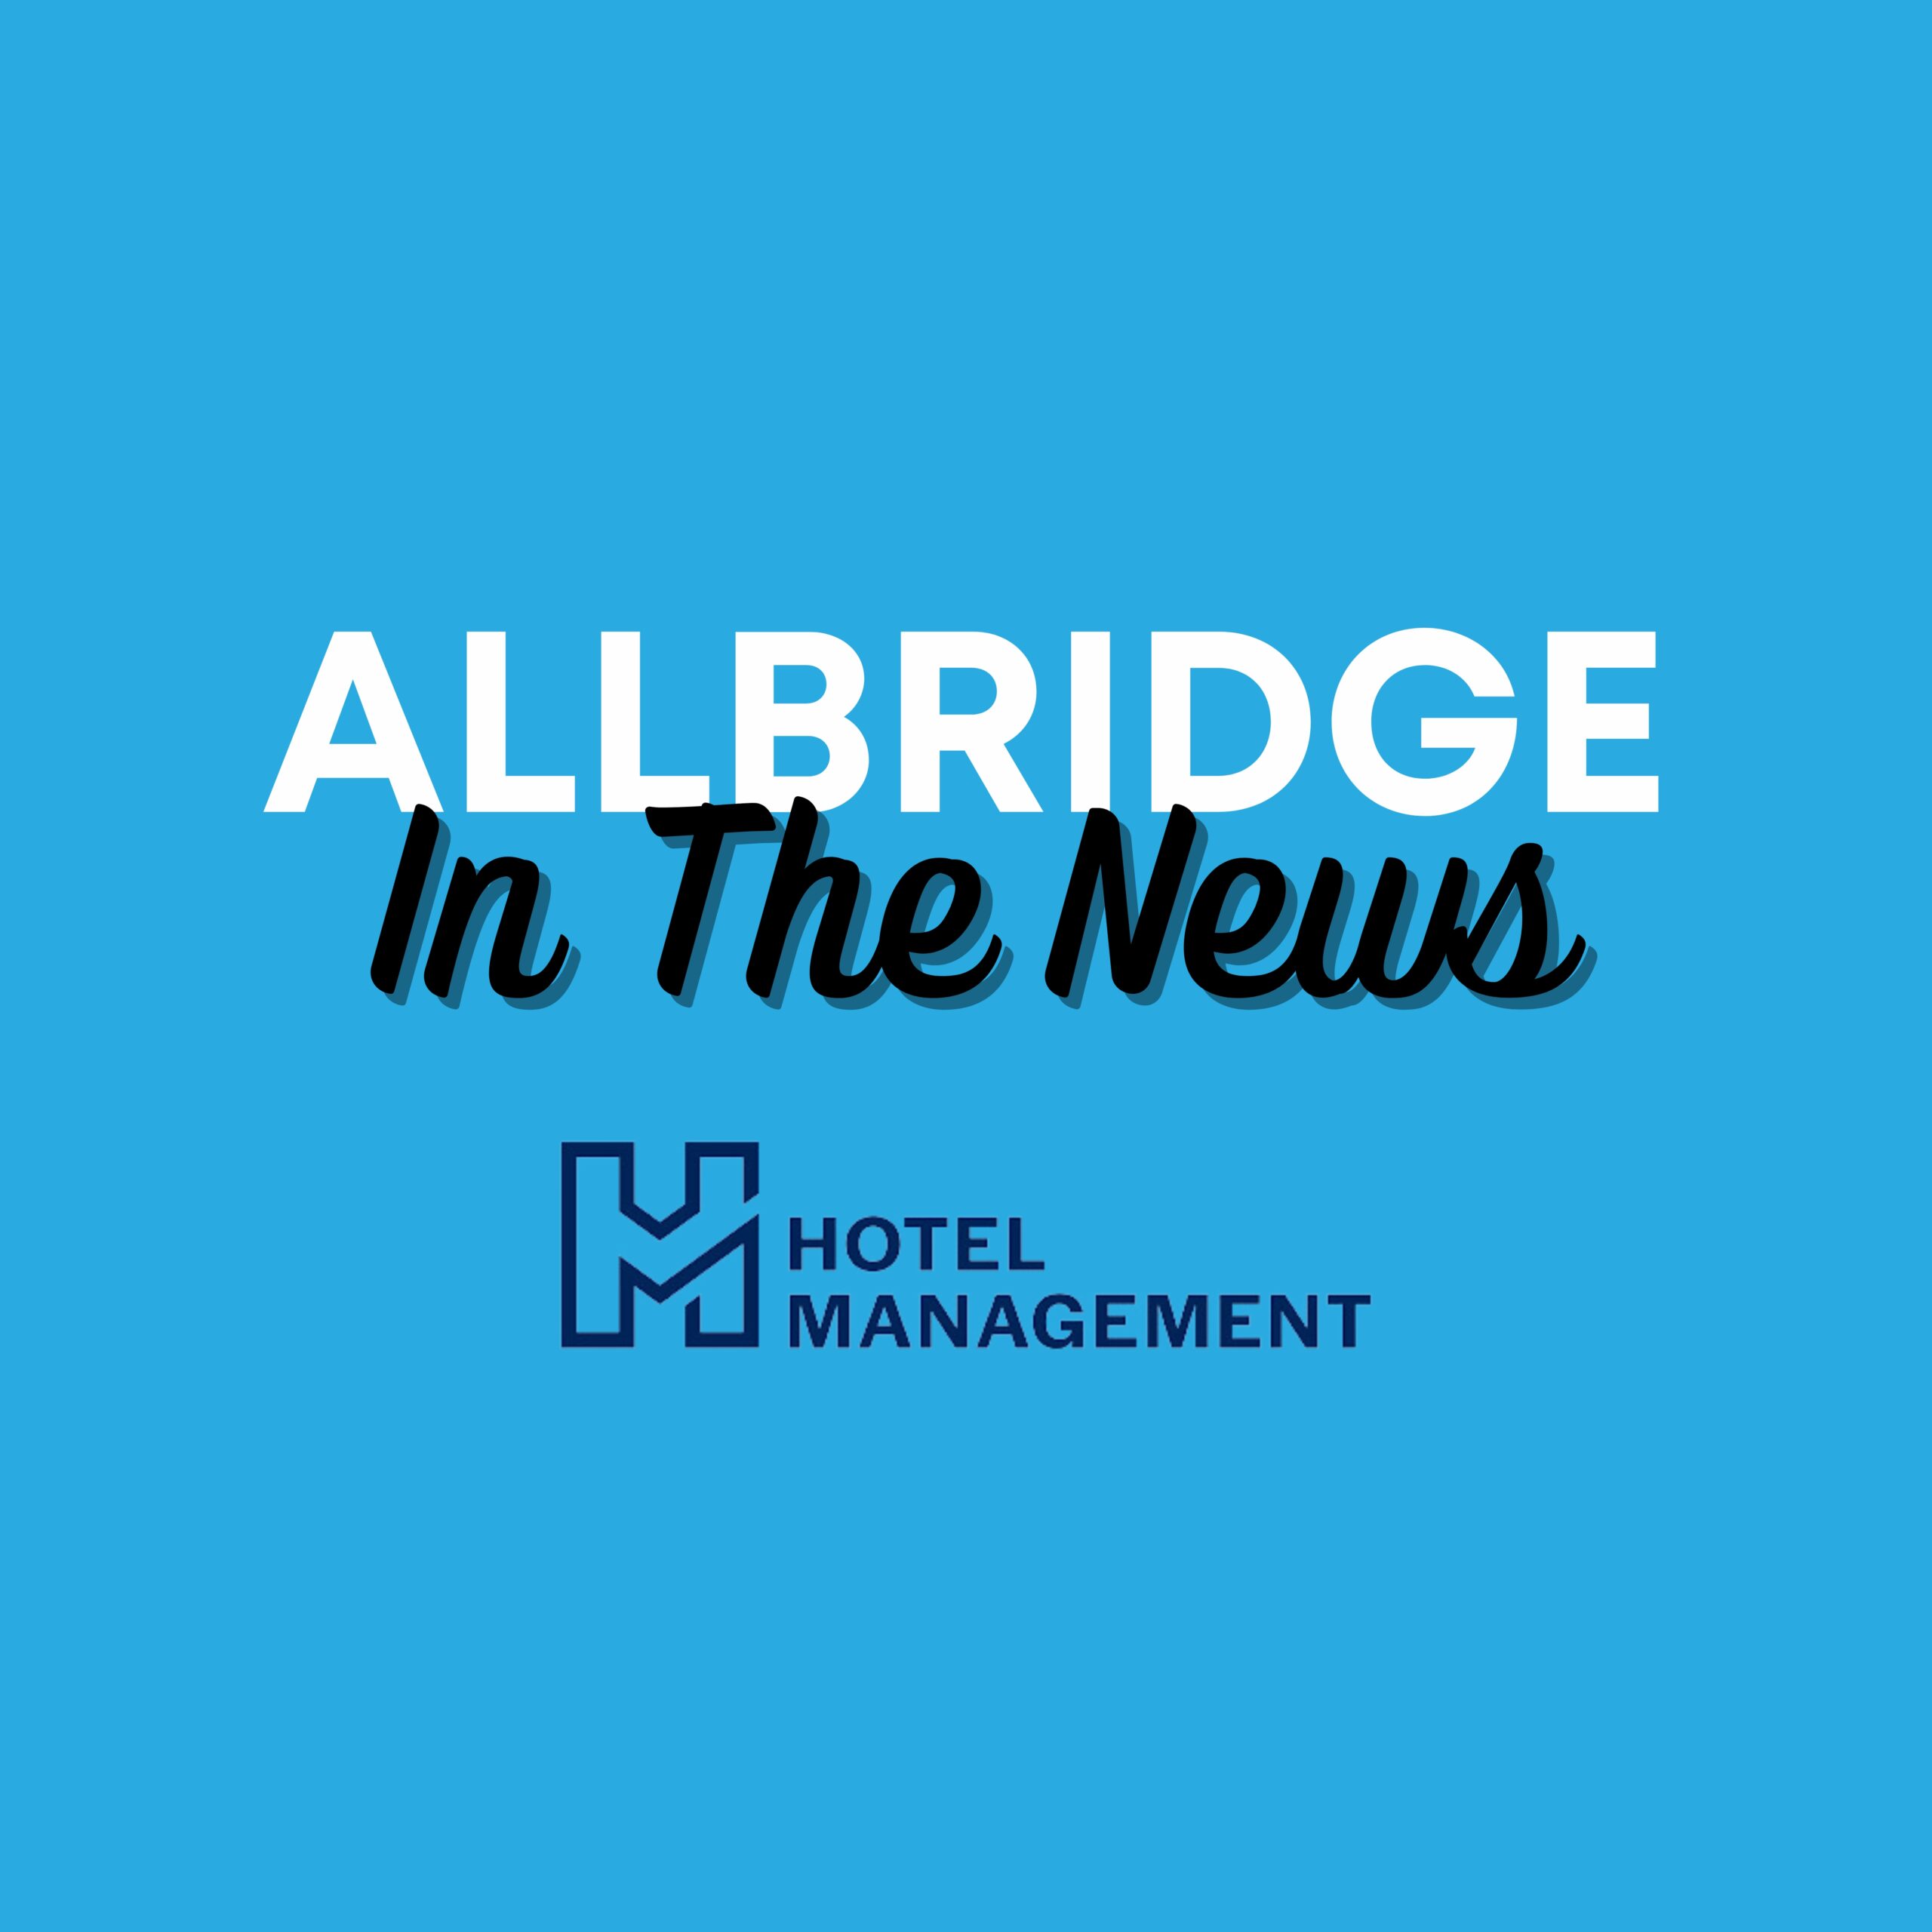 Allbridge In The News Hotel Management